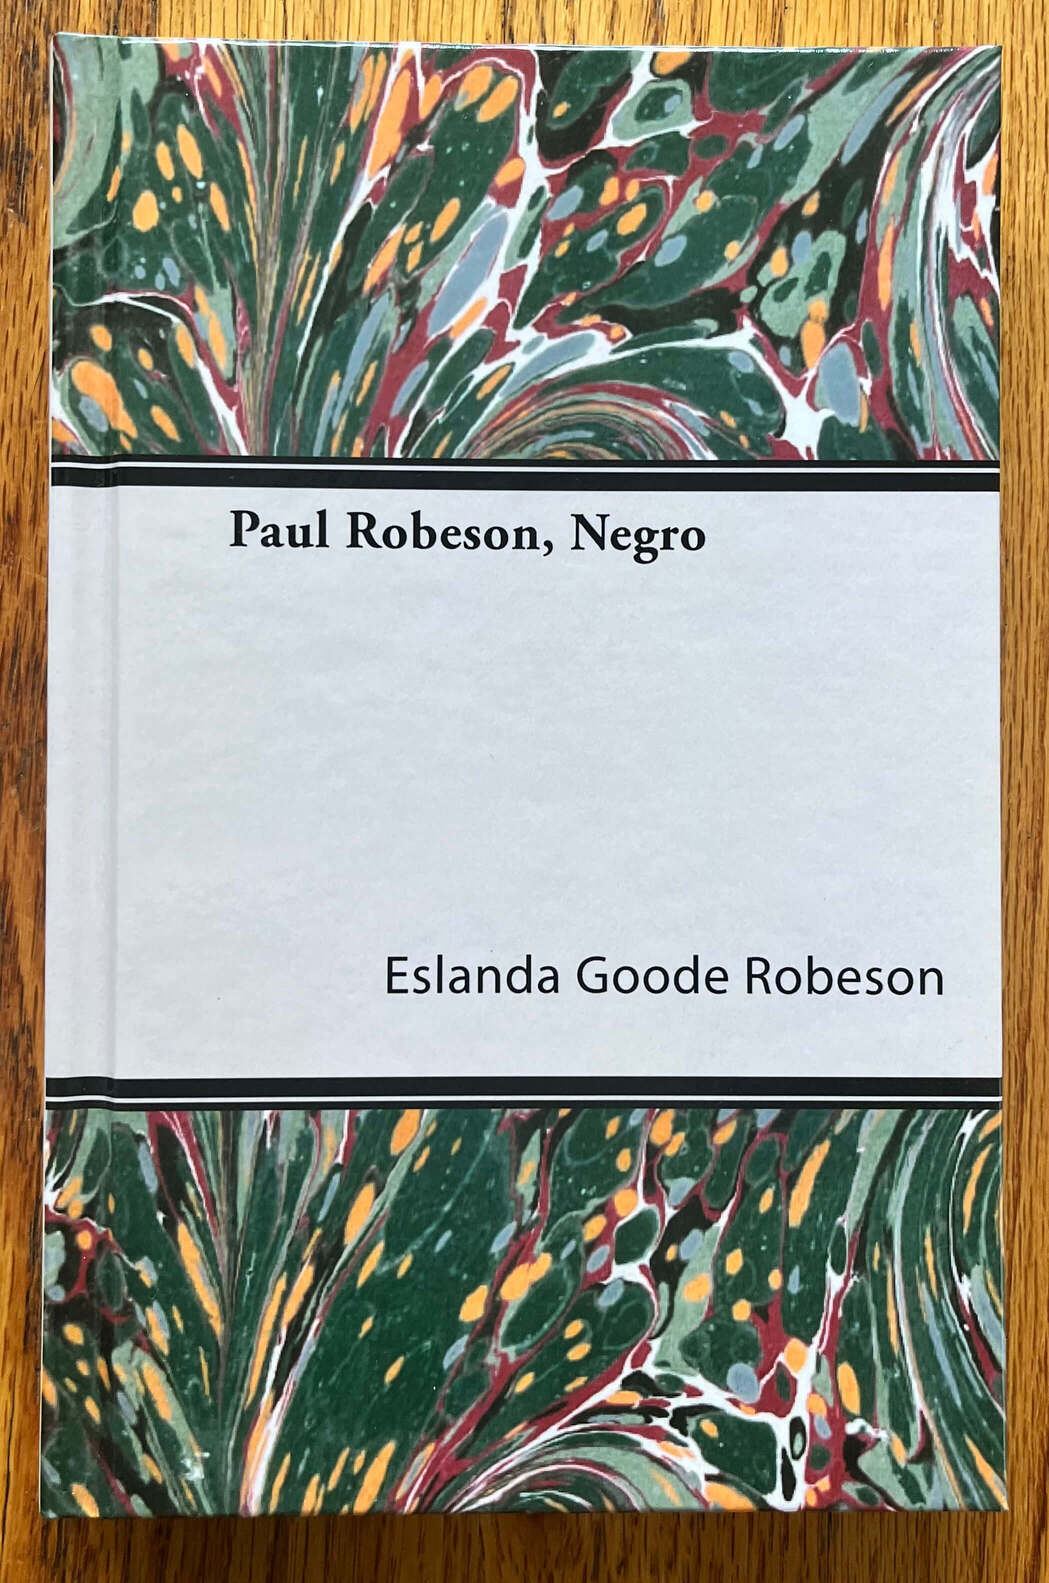 “Paul Robeson, Negro” by Eslanda Goode Robeson.